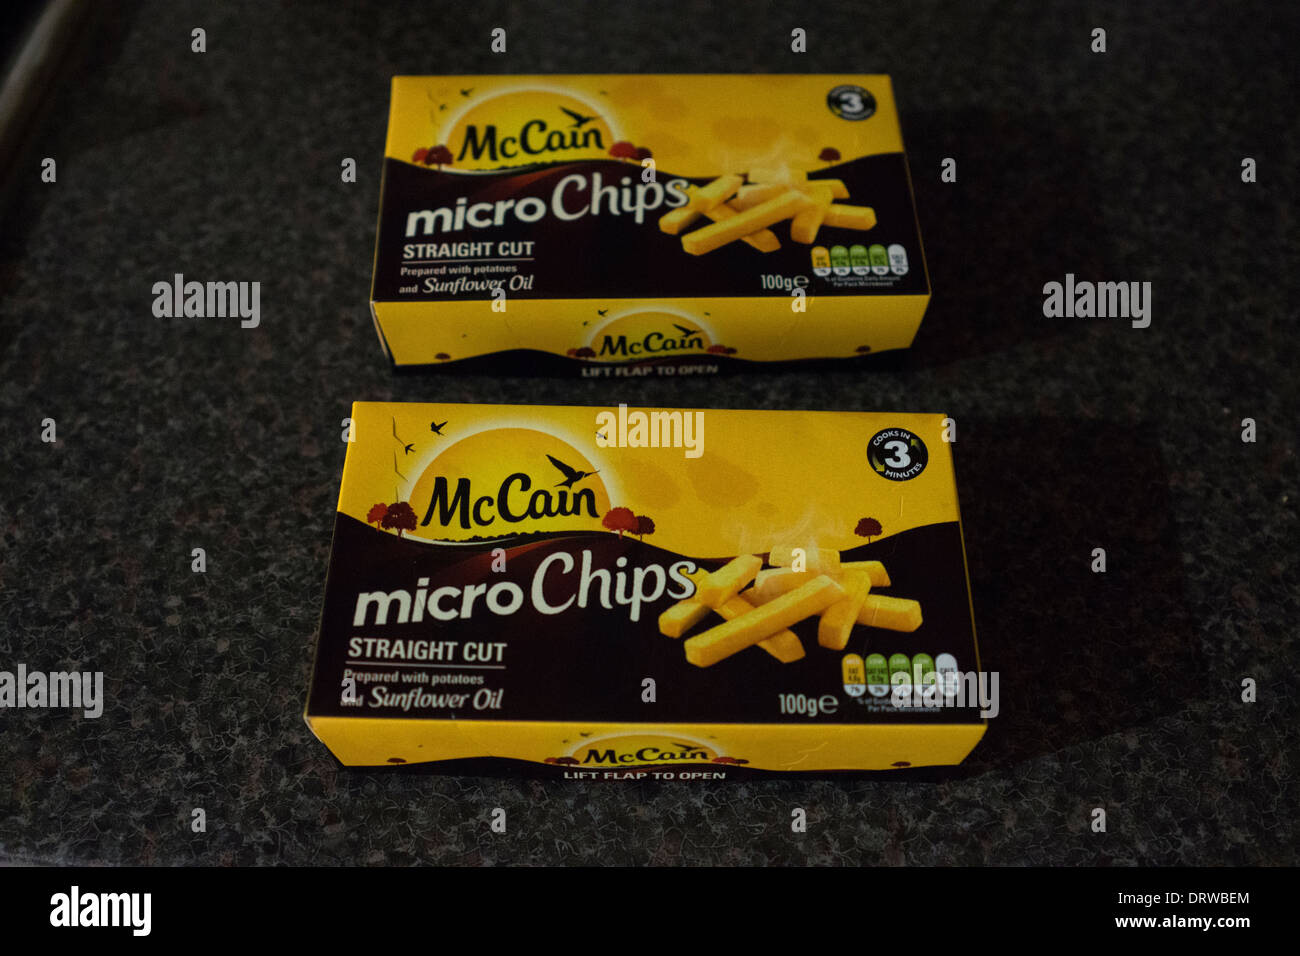 Microwave potato chips frozen fries boxes box Stock Photo: 66326028 - Alamy